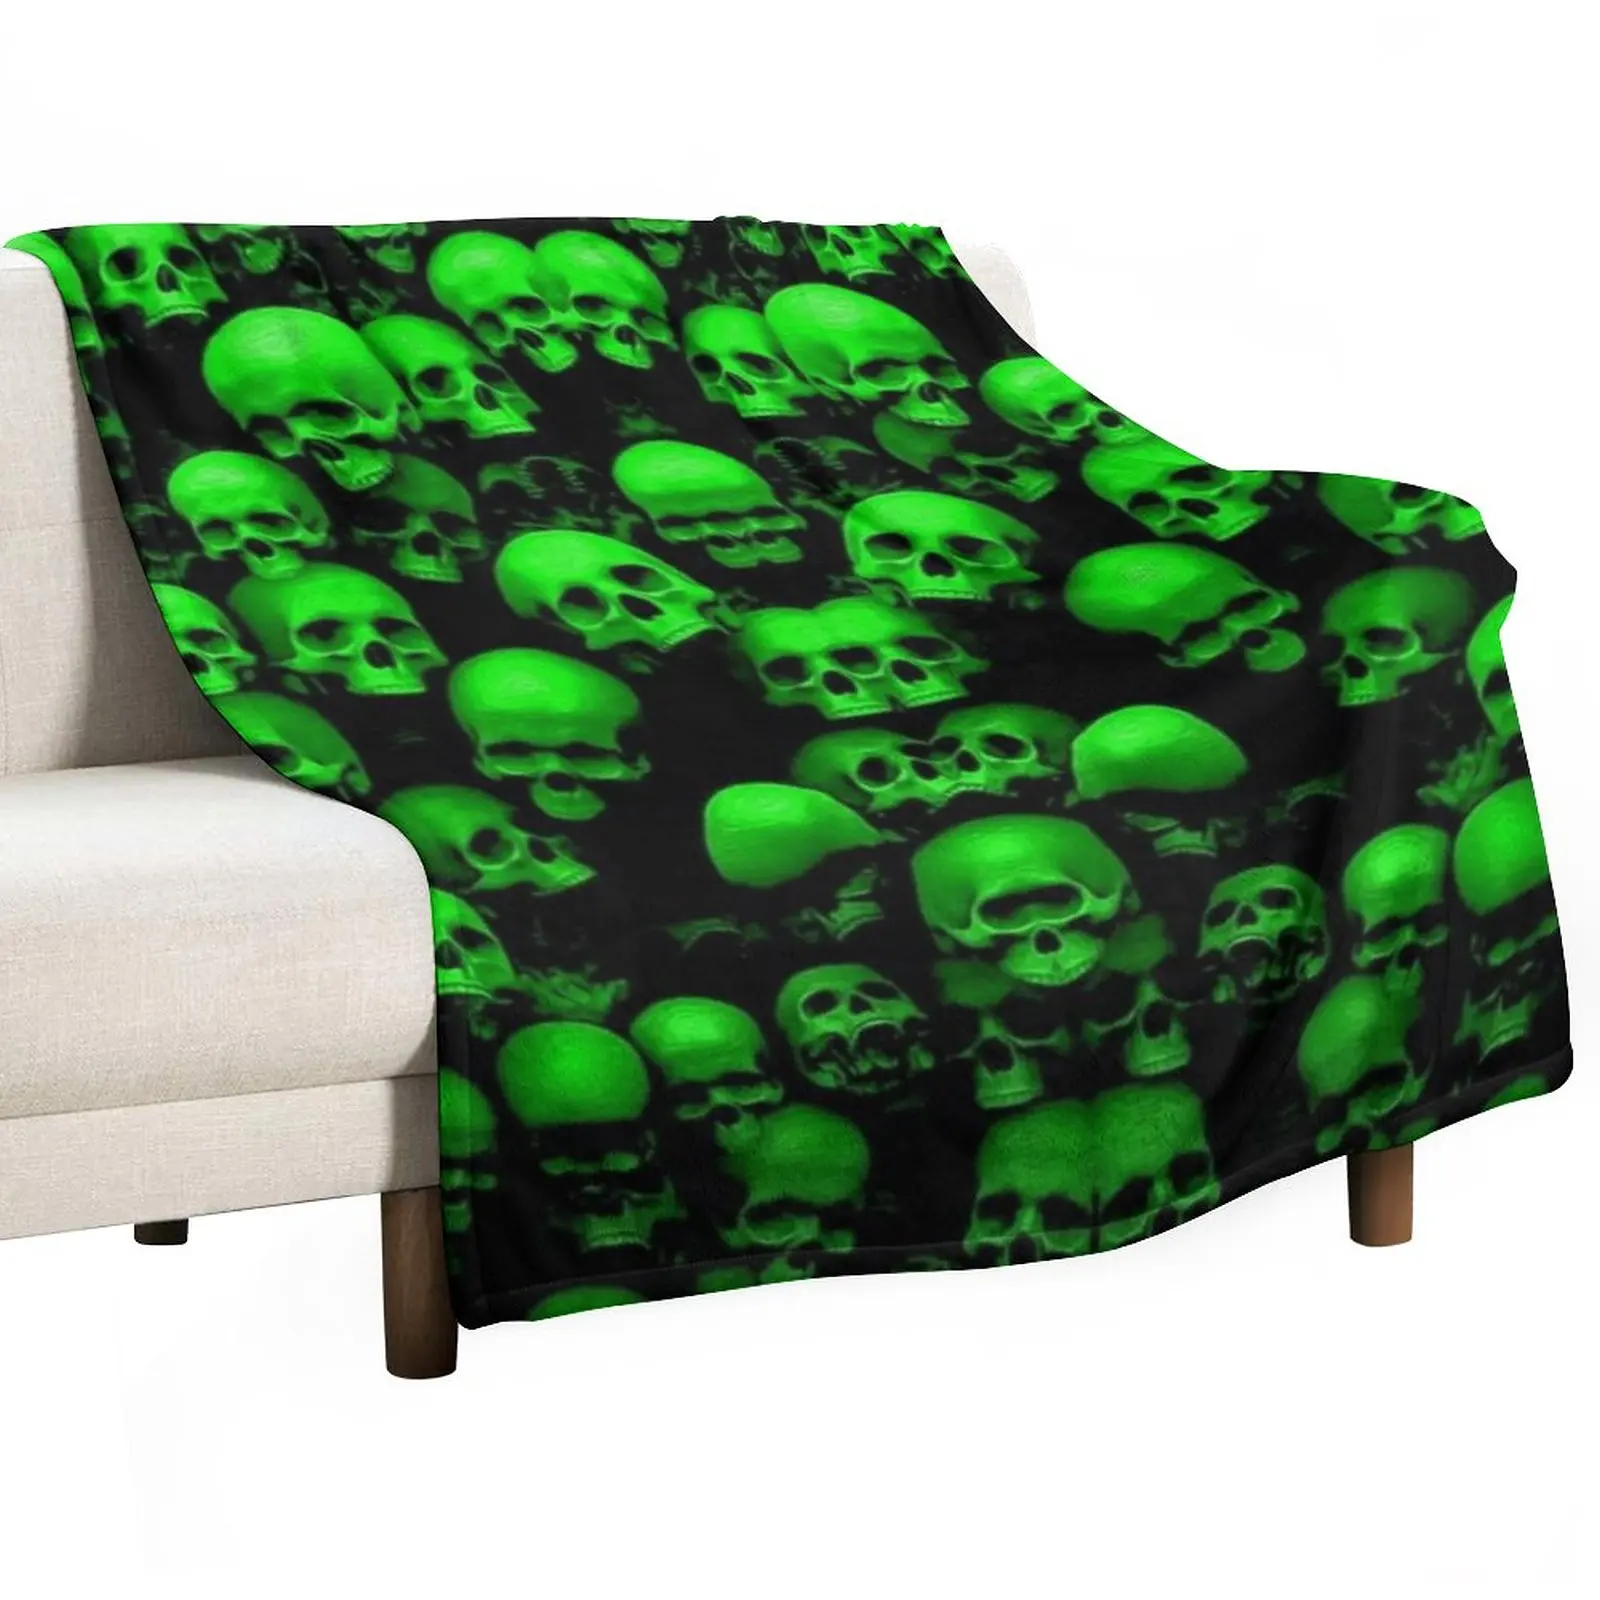 

Neon Green Trippy Skull Throw Blanket manga blankets and throws Soft Big Blanket Luxury Brand Blanket